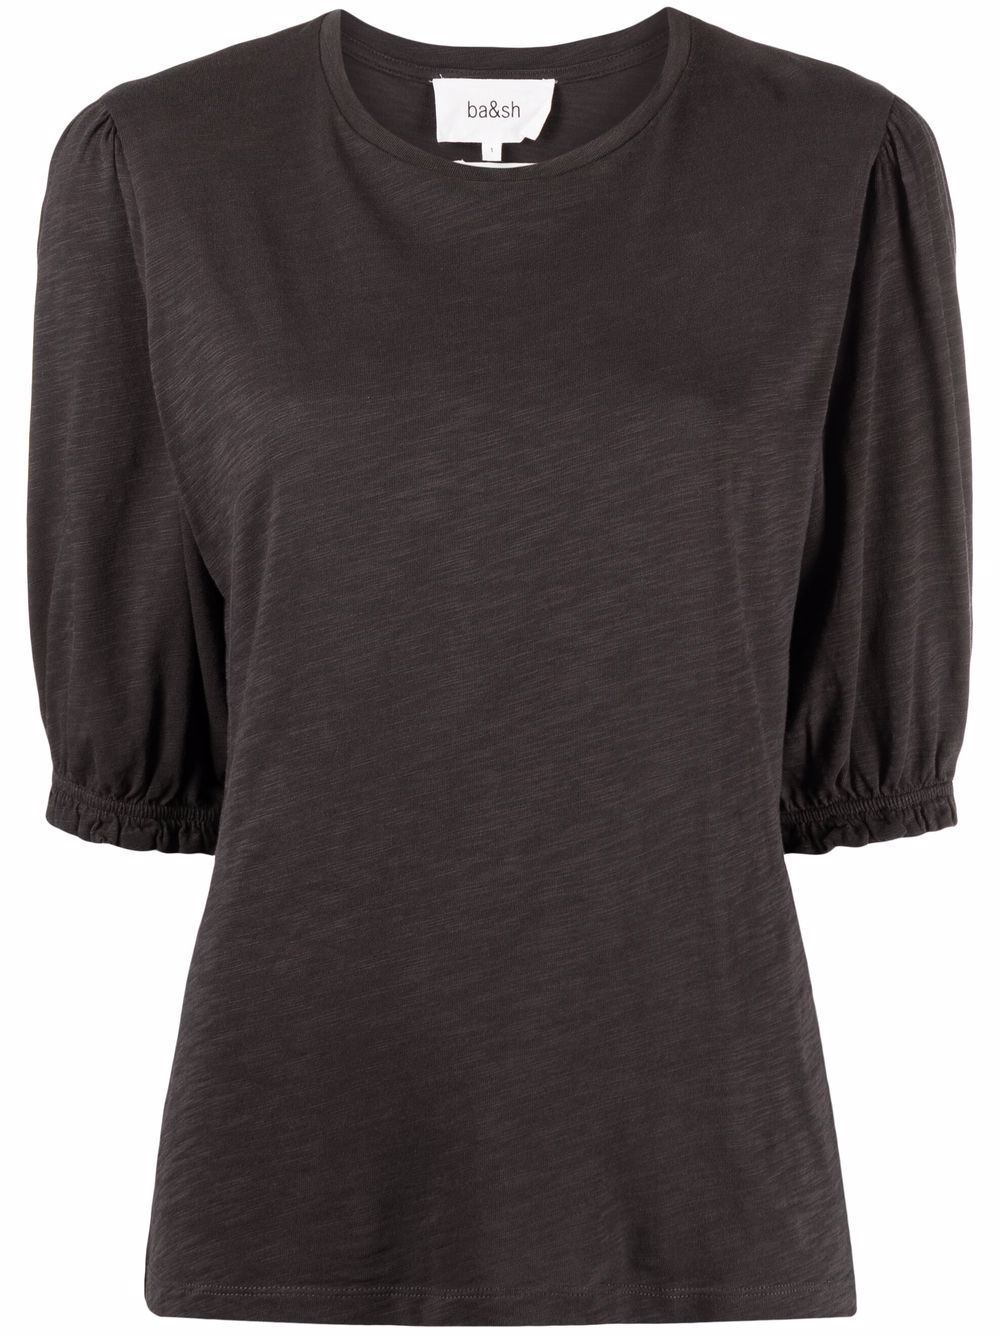 Ba&sh Puff Sleeve T-shirt In Carbone | ModeSens